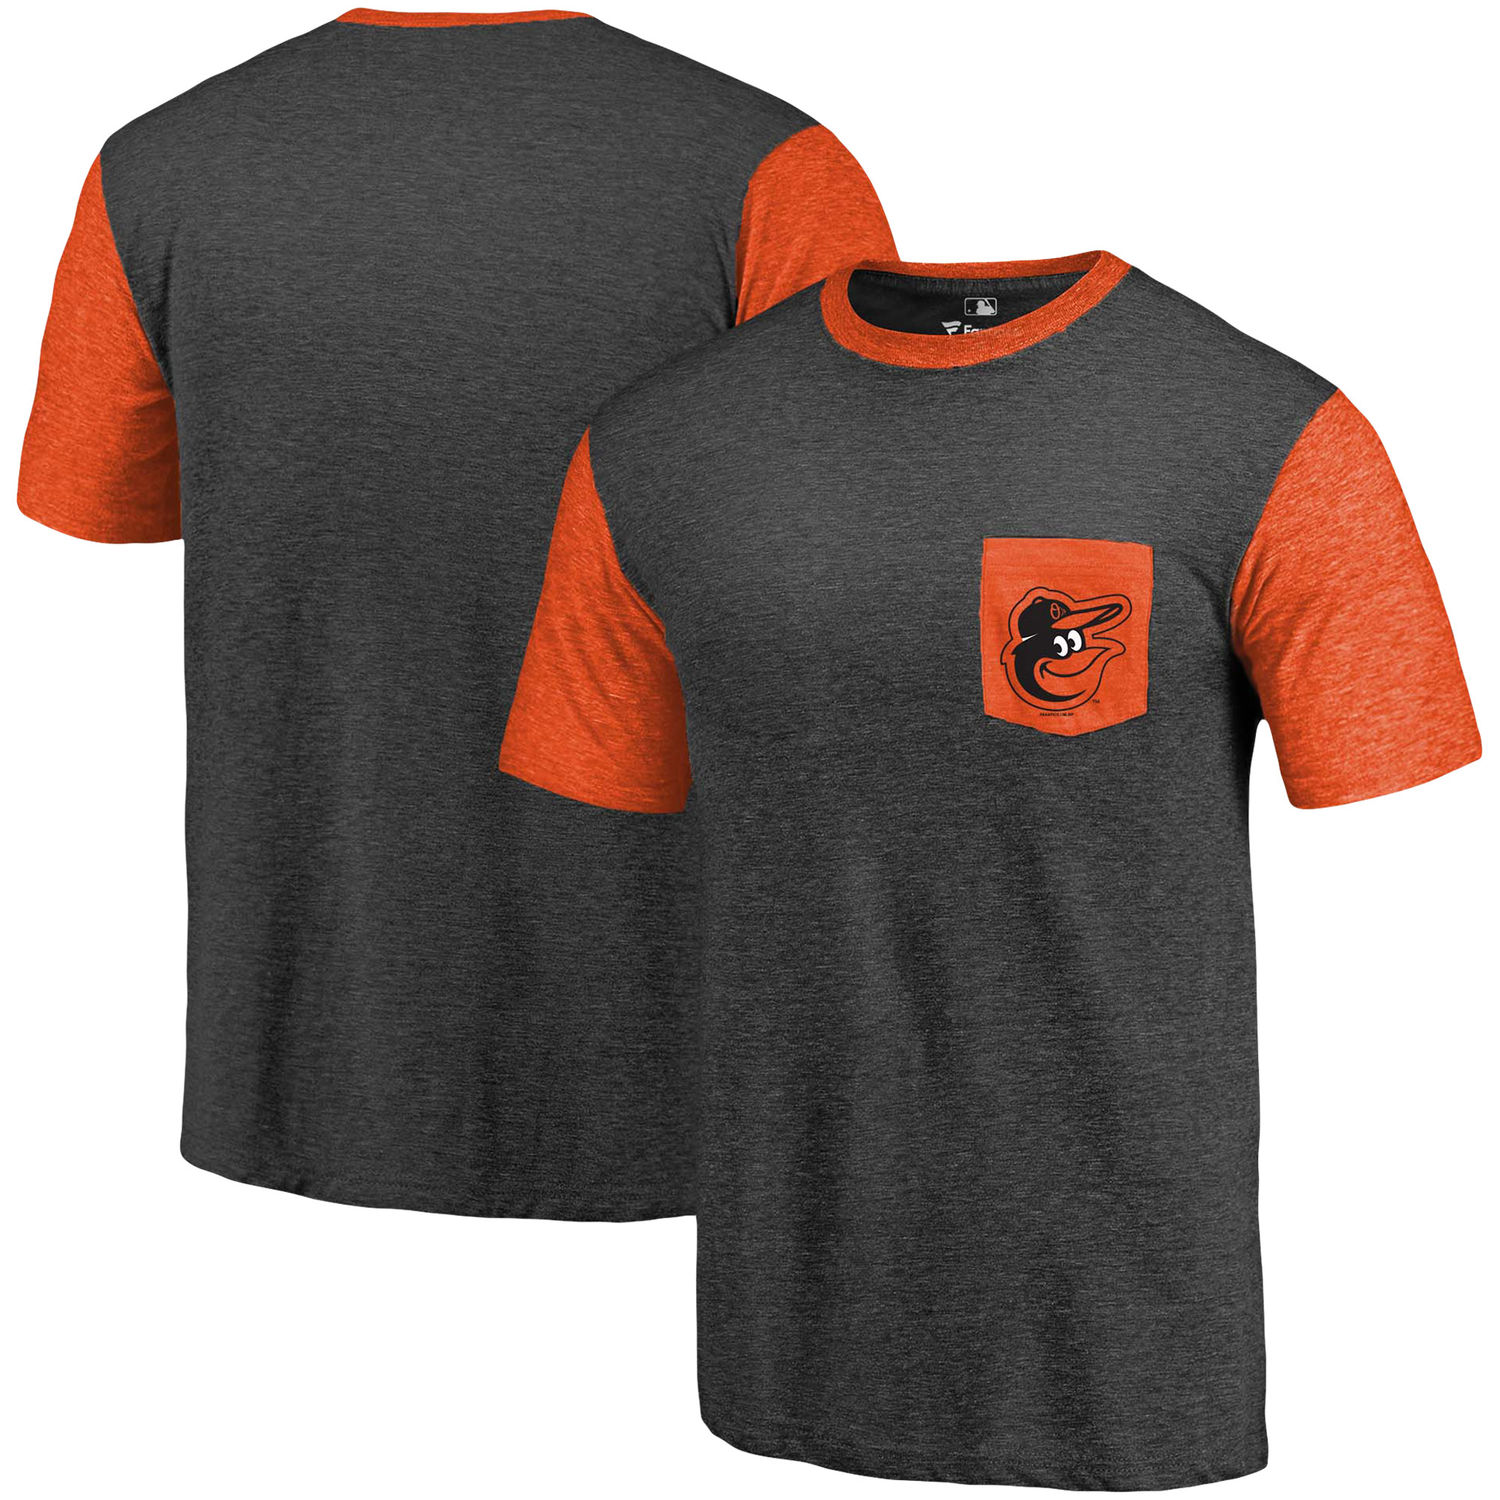 Men's Baltimore Orioles Fanatics Branded Black/Orange Refresh Pocket T-Shirt